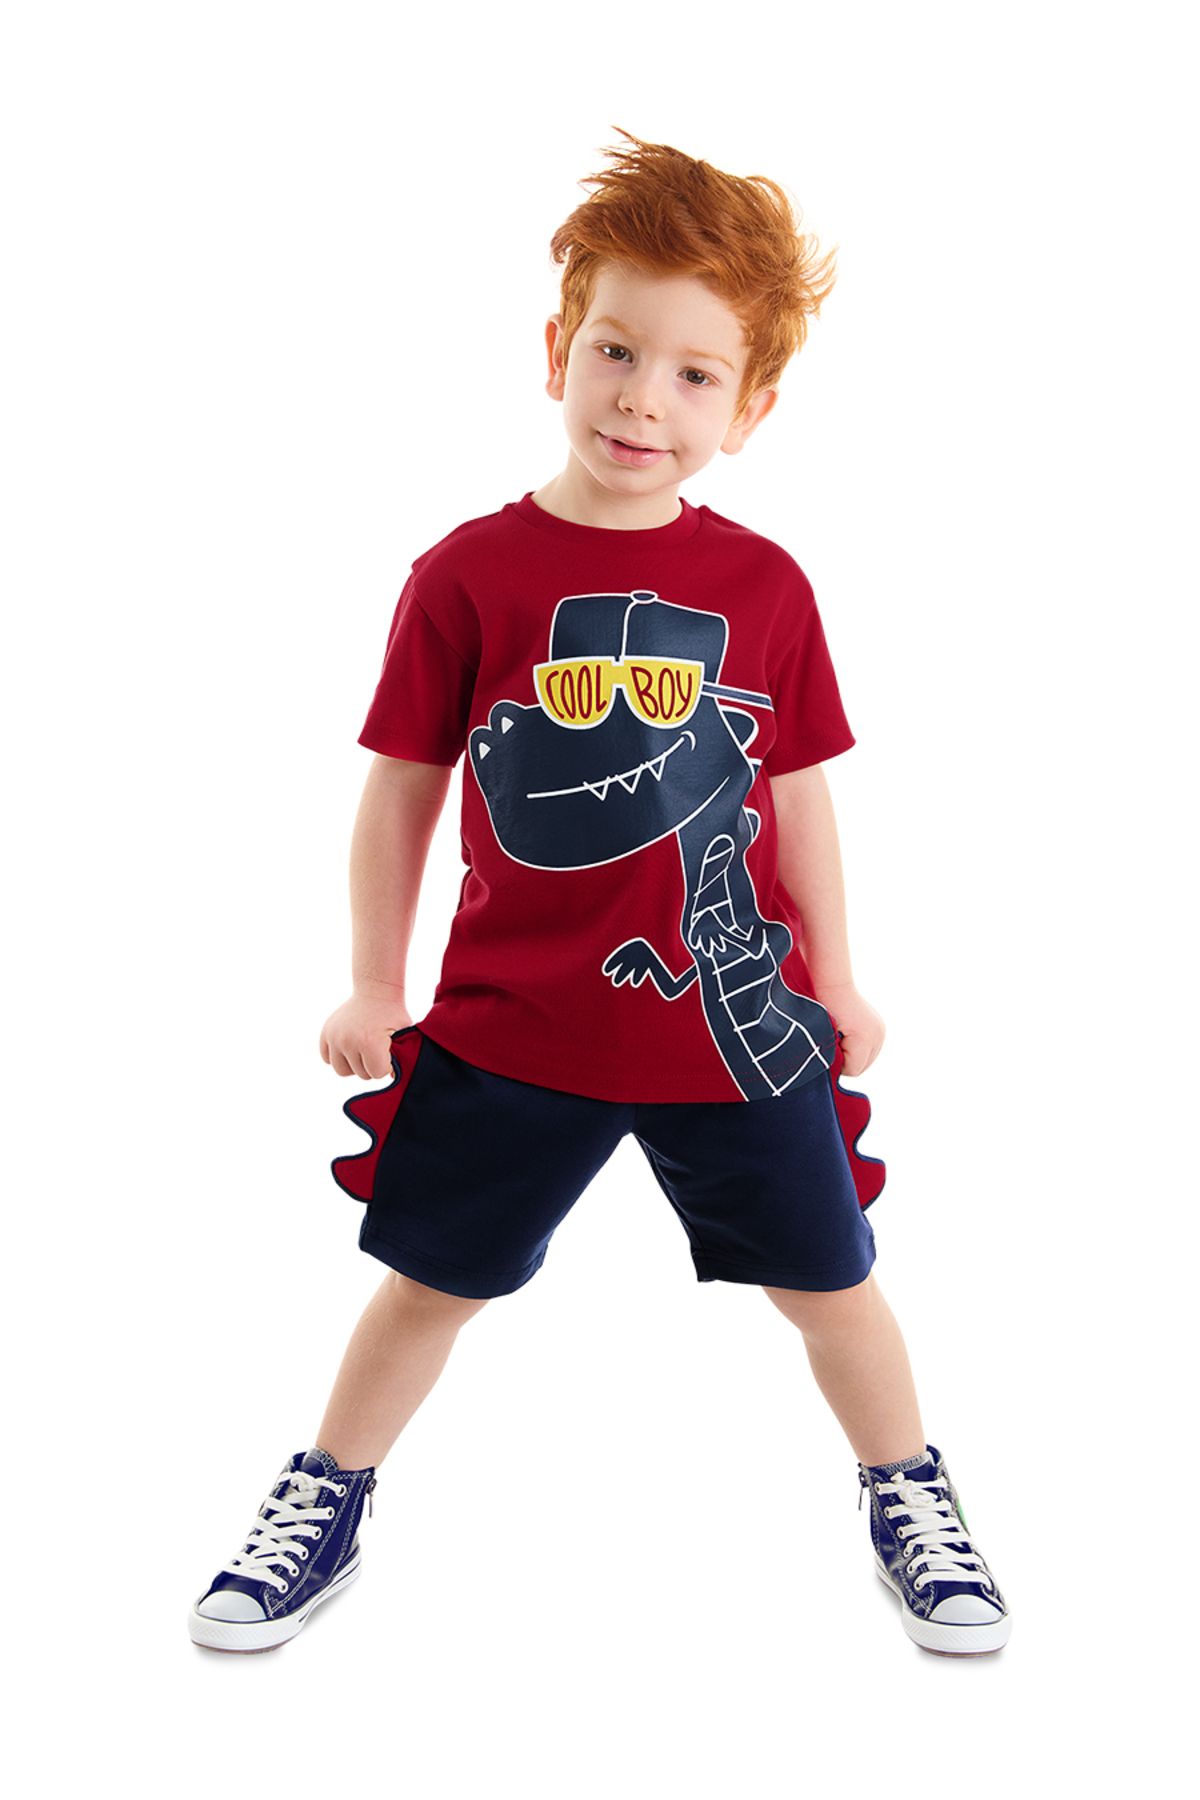 Denokids Cool Dino Erkek Çocuk T-shirt Şort Takım